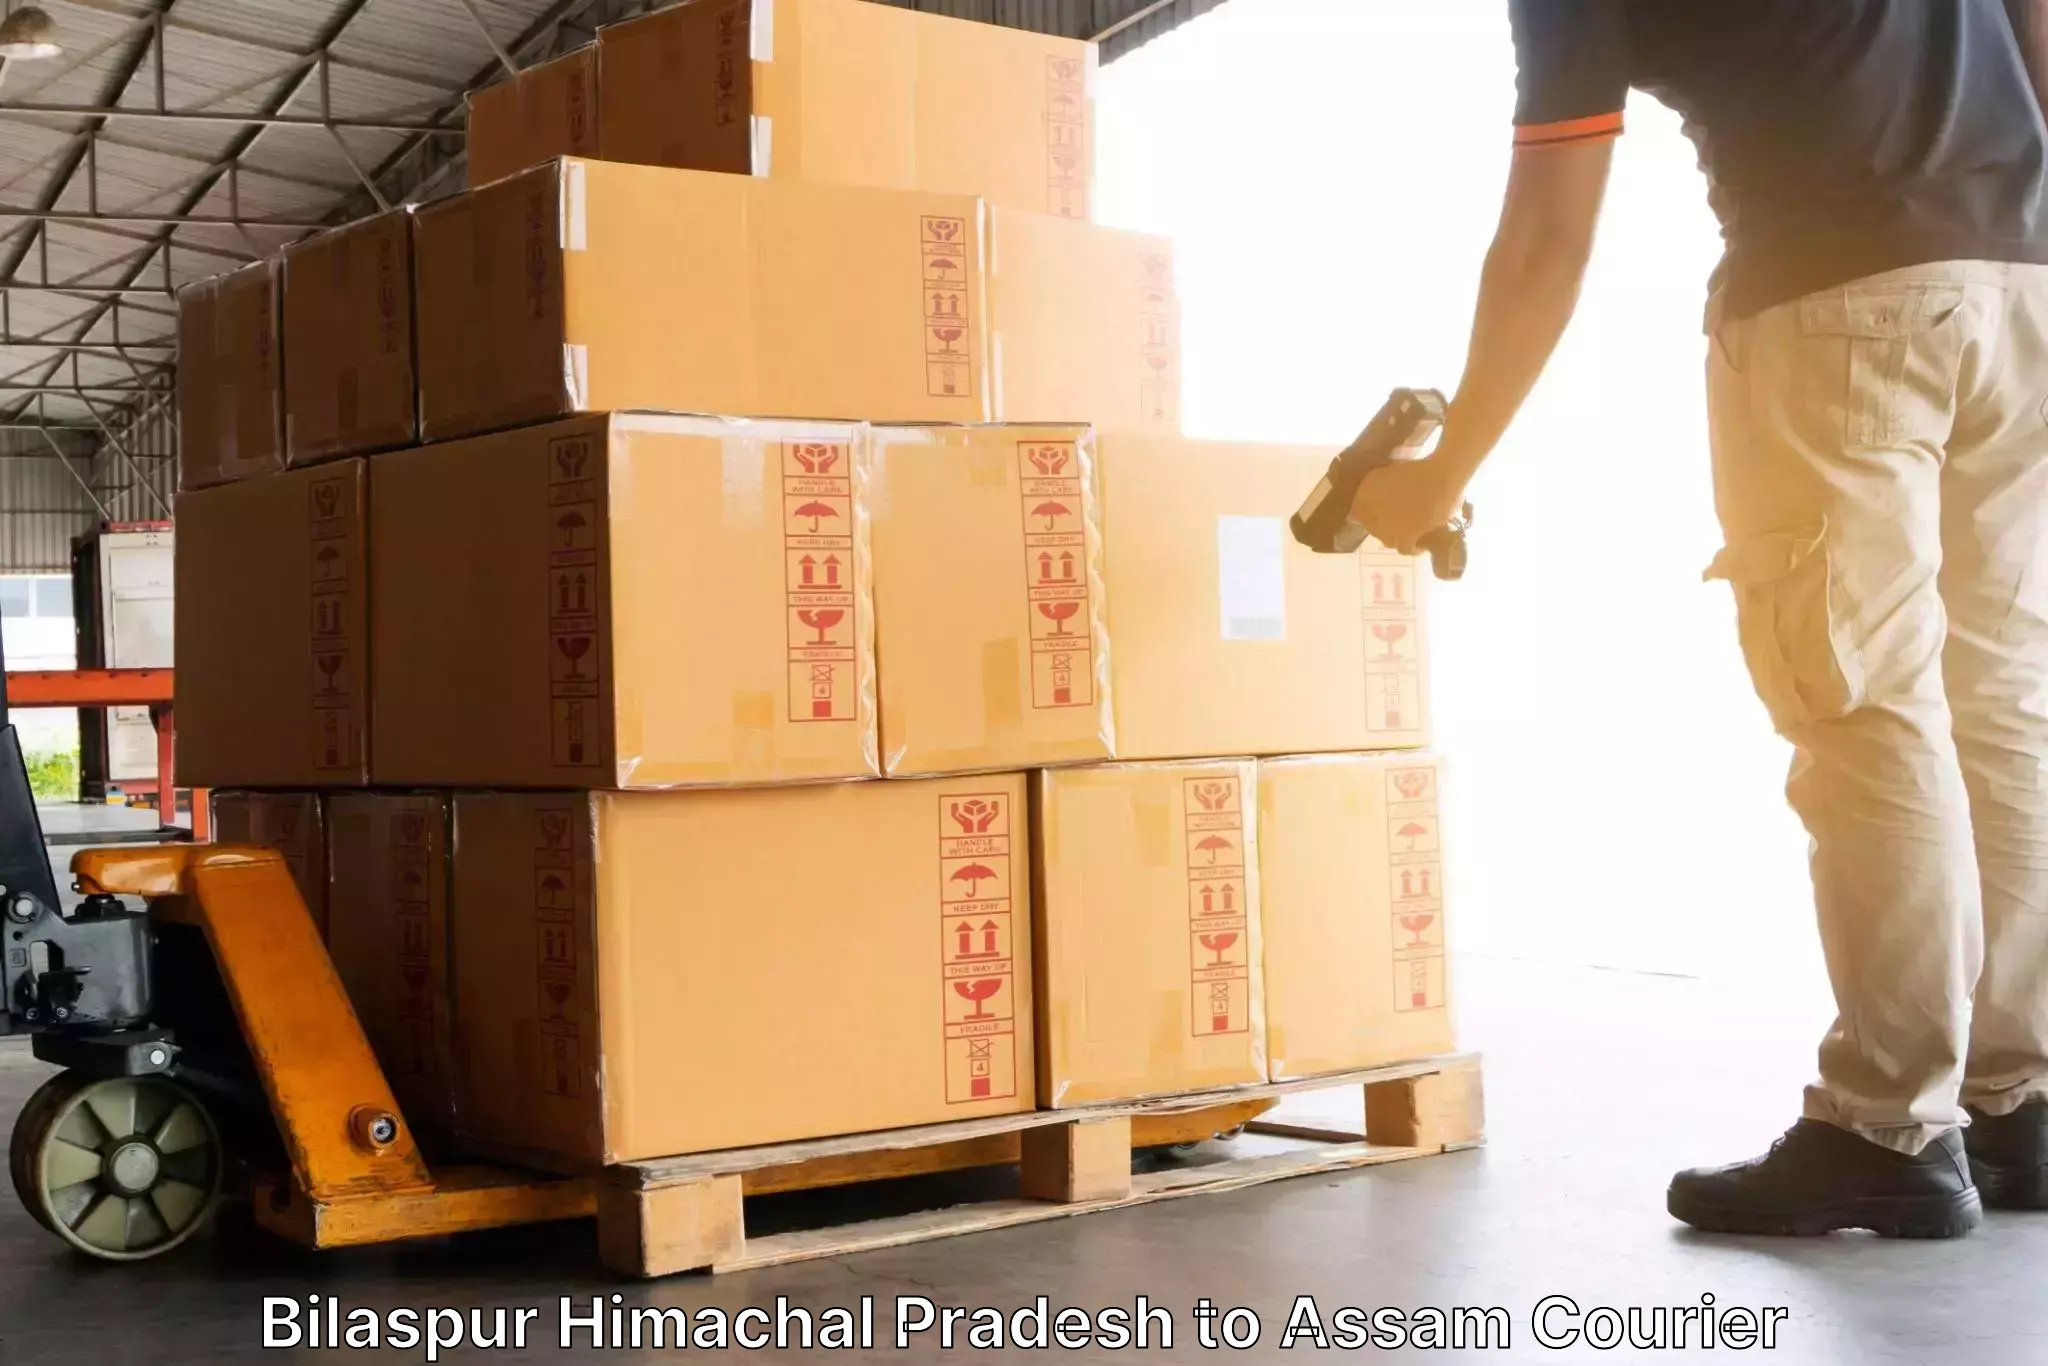 Express delivery capabilities Bilaspur Himachal Pradesh to Dergaon